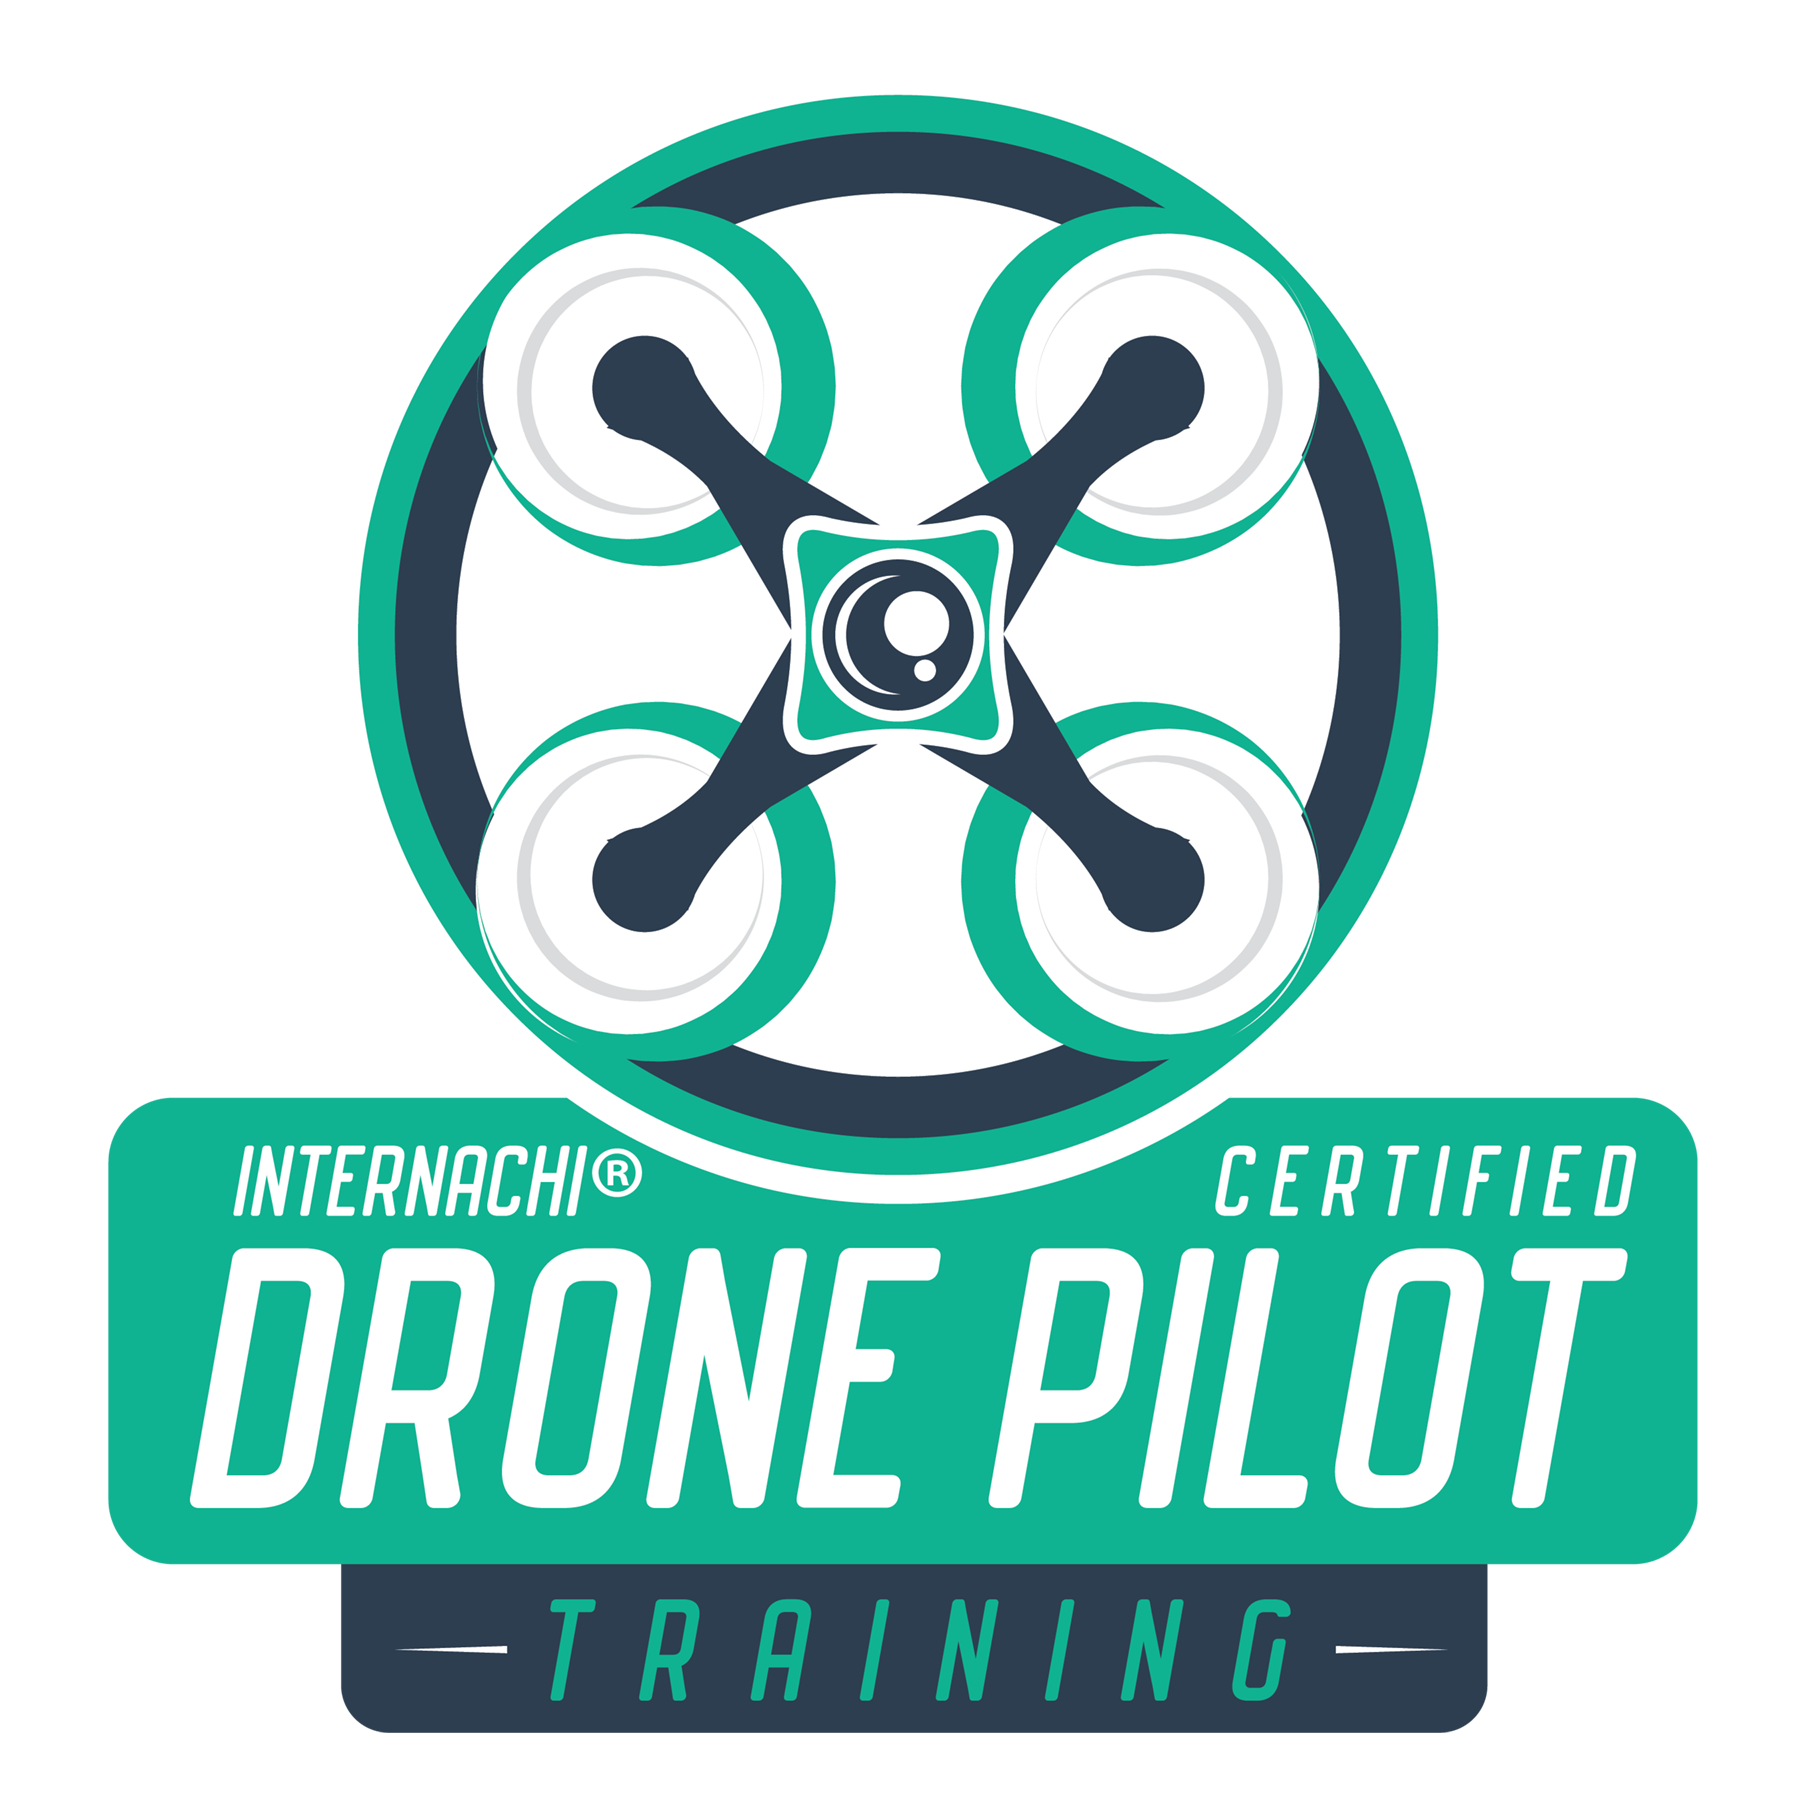 InterNACHI Drone Pilot Certified Training Home Inspectors